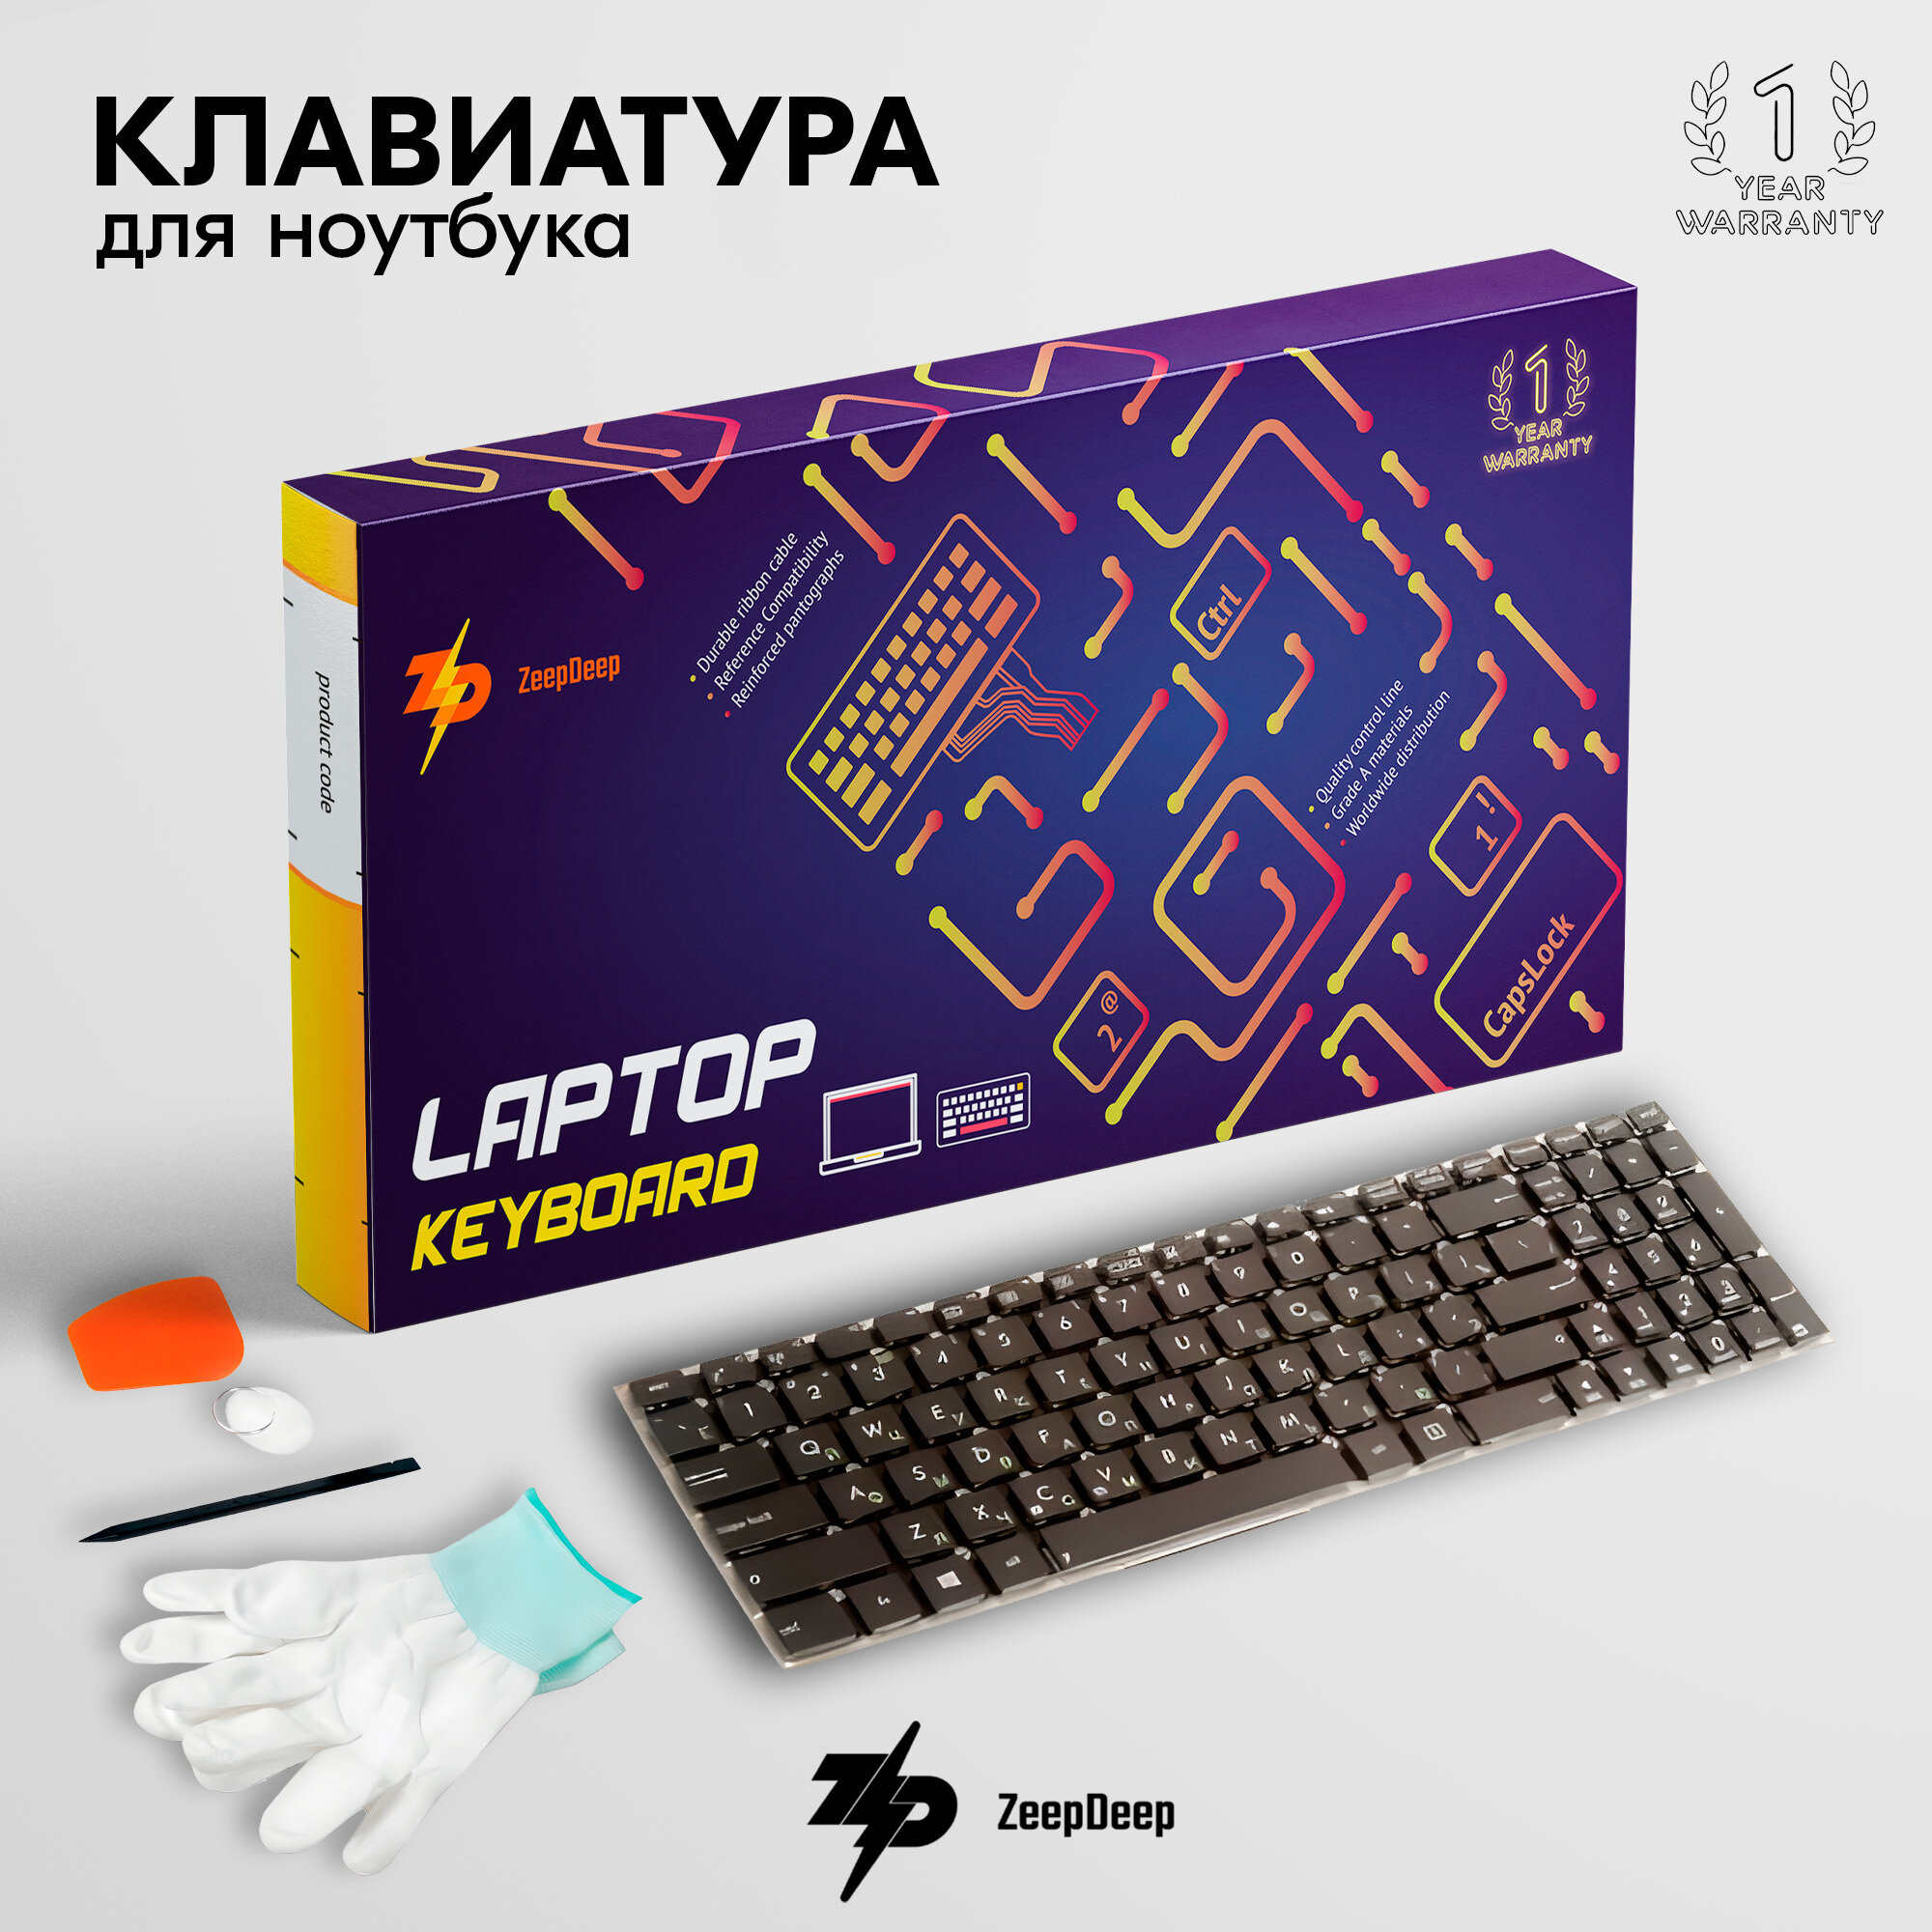 Клавиатура (keyboard) для Asus X501, X550, X551, F552, X550Ea, X550Cc, X501A, X501U, X550L, X550La, X550Lb, X551C, X550Ca, X550Vb, X550Vc, (ZeepDeep Haptic) 0KNB0-612BRU00